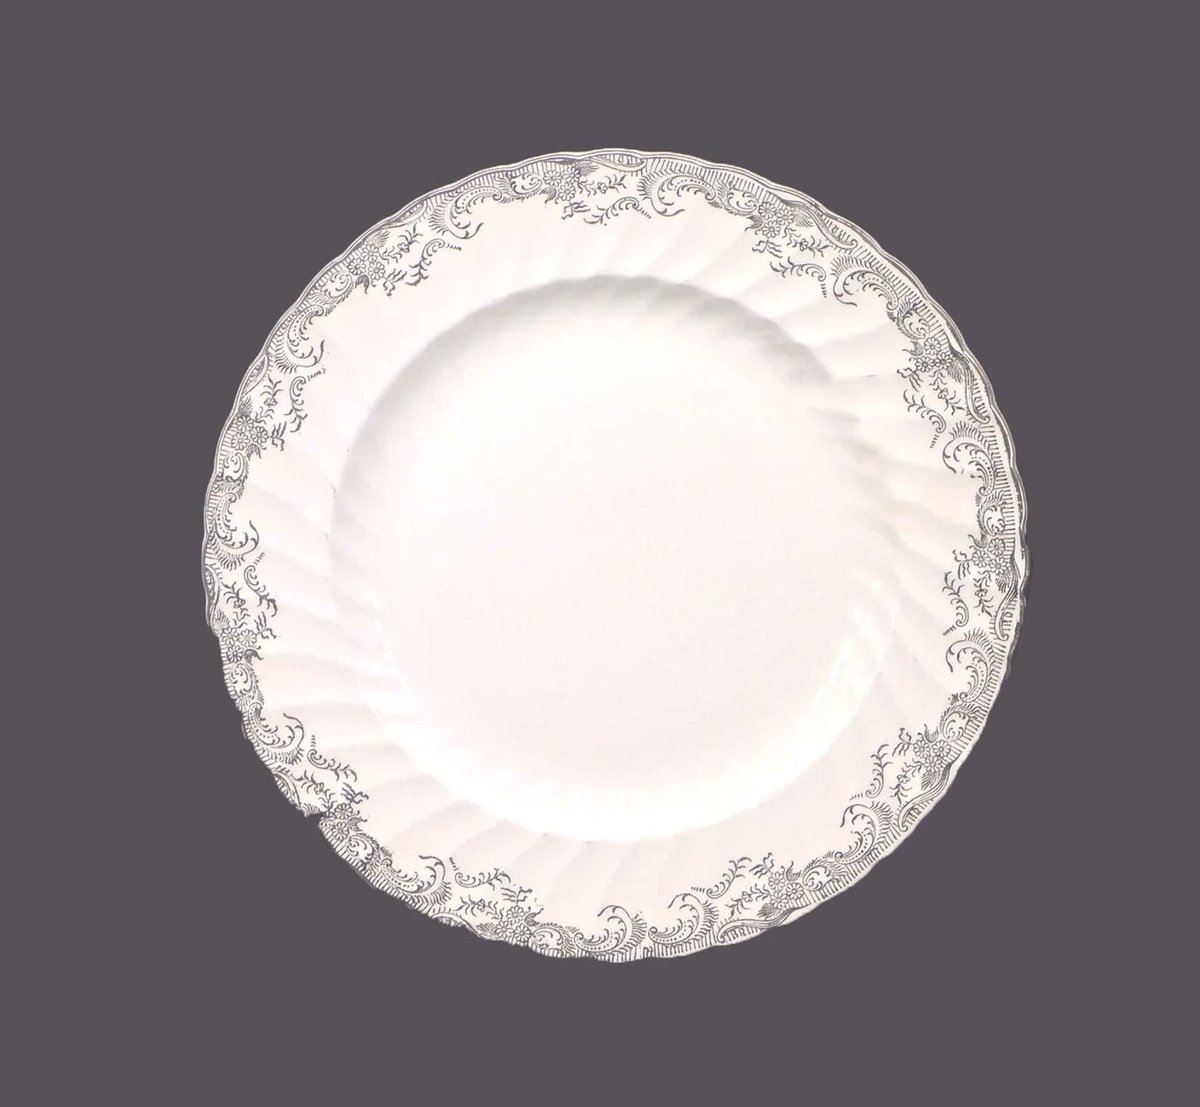 Washington Pottery Silverlea dinner plate made in England. Platinum florals. etsy.me/44Uz5Ml via @Etsy #BuyfromGroovy #antiqueshop #tableware #dinnerware #tabledecor #WashingtonPottery #WashingtonSilverlea #Silverlea #EtsySellers